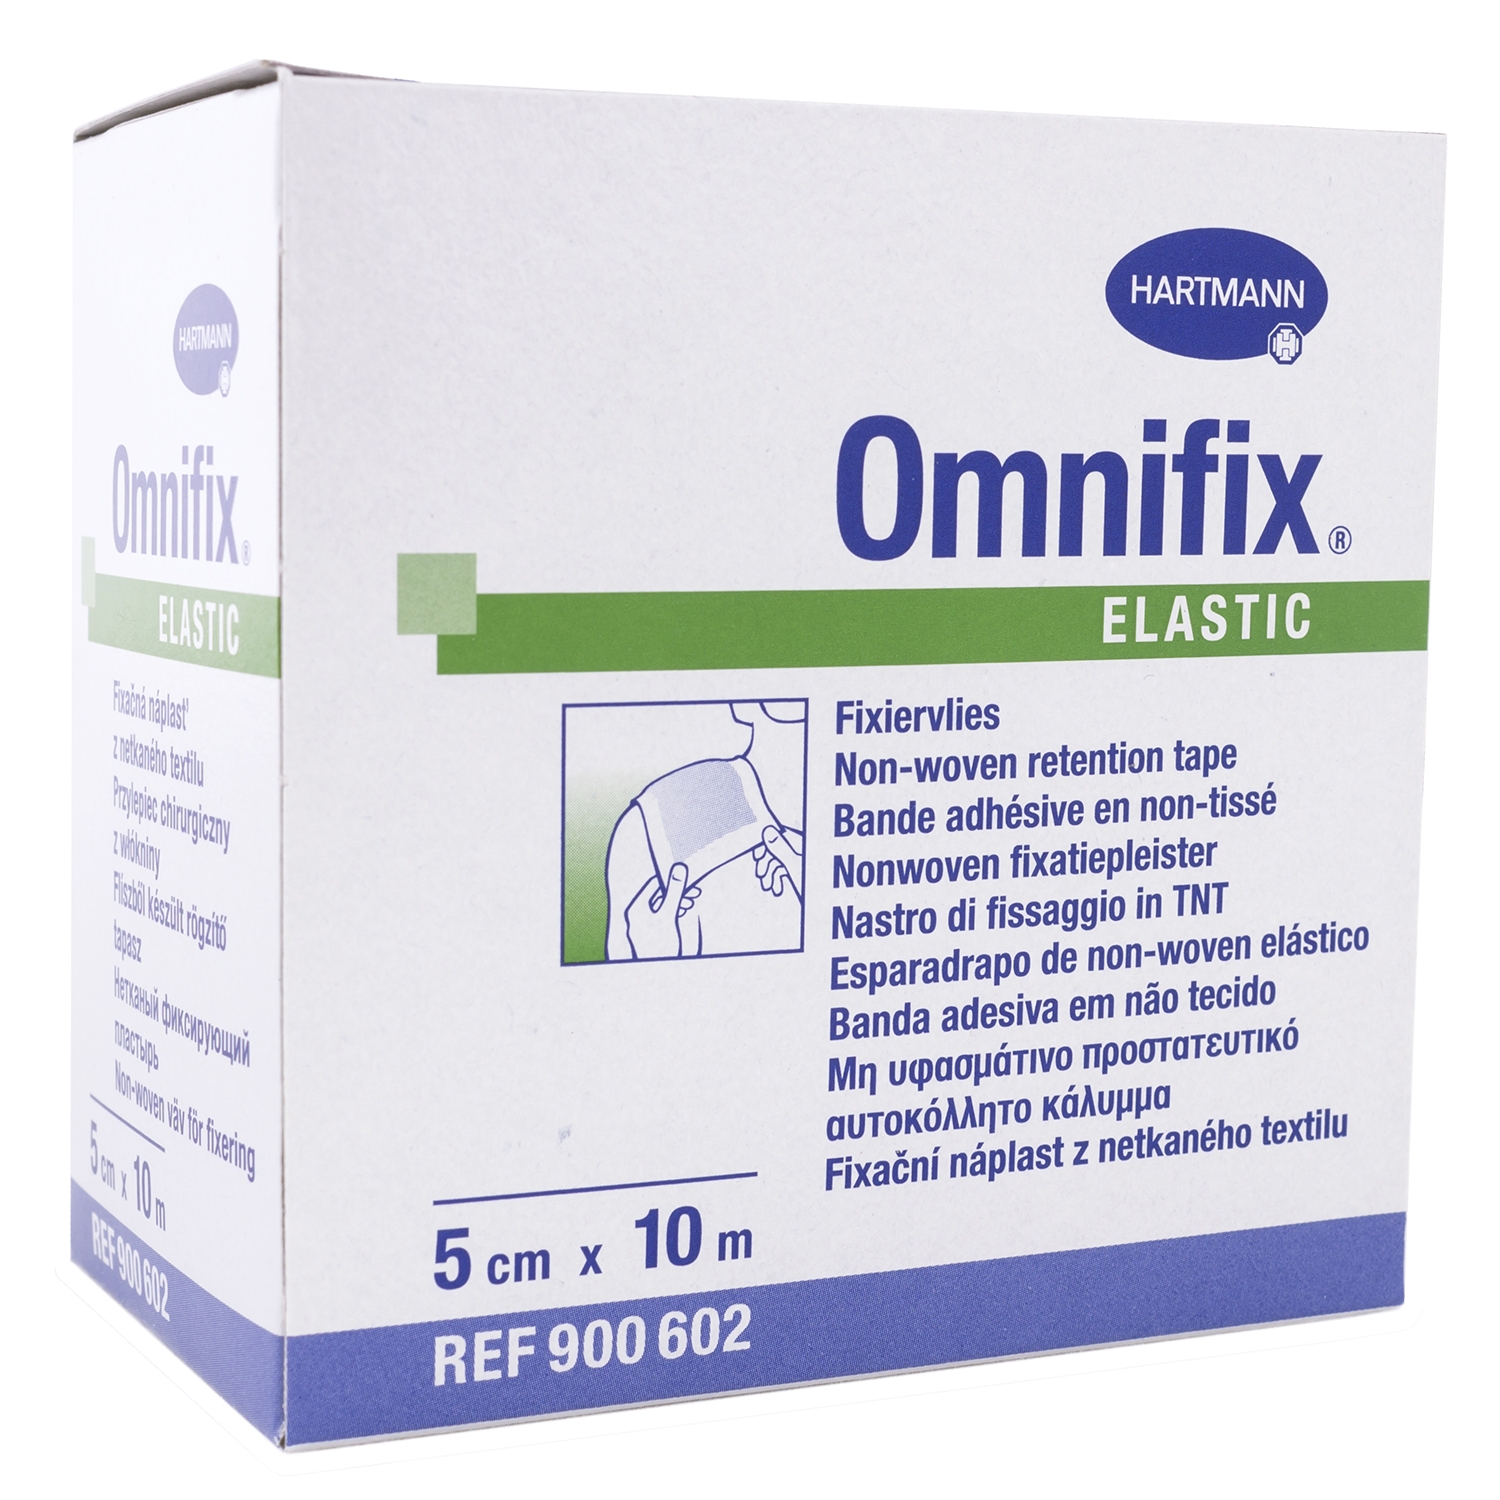 Omnifix elastic - 10 m